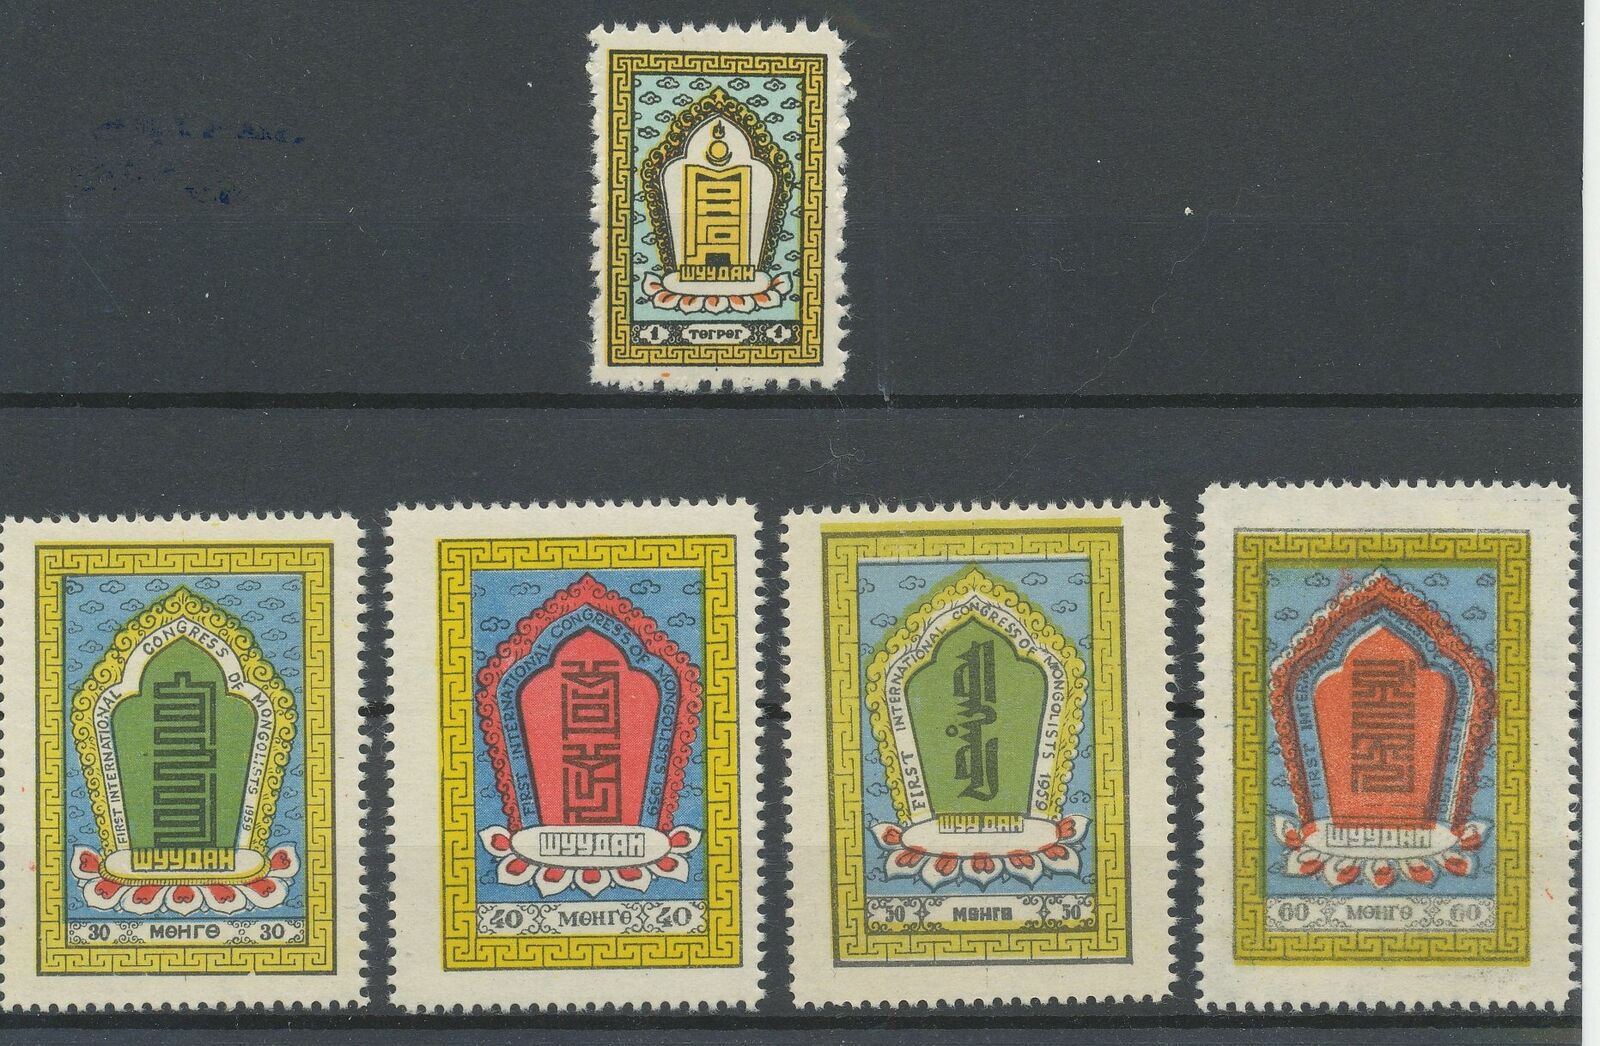 [p46] Mongolia 1959 Congress Good Set Very Fine Mnh Stamps Value $70